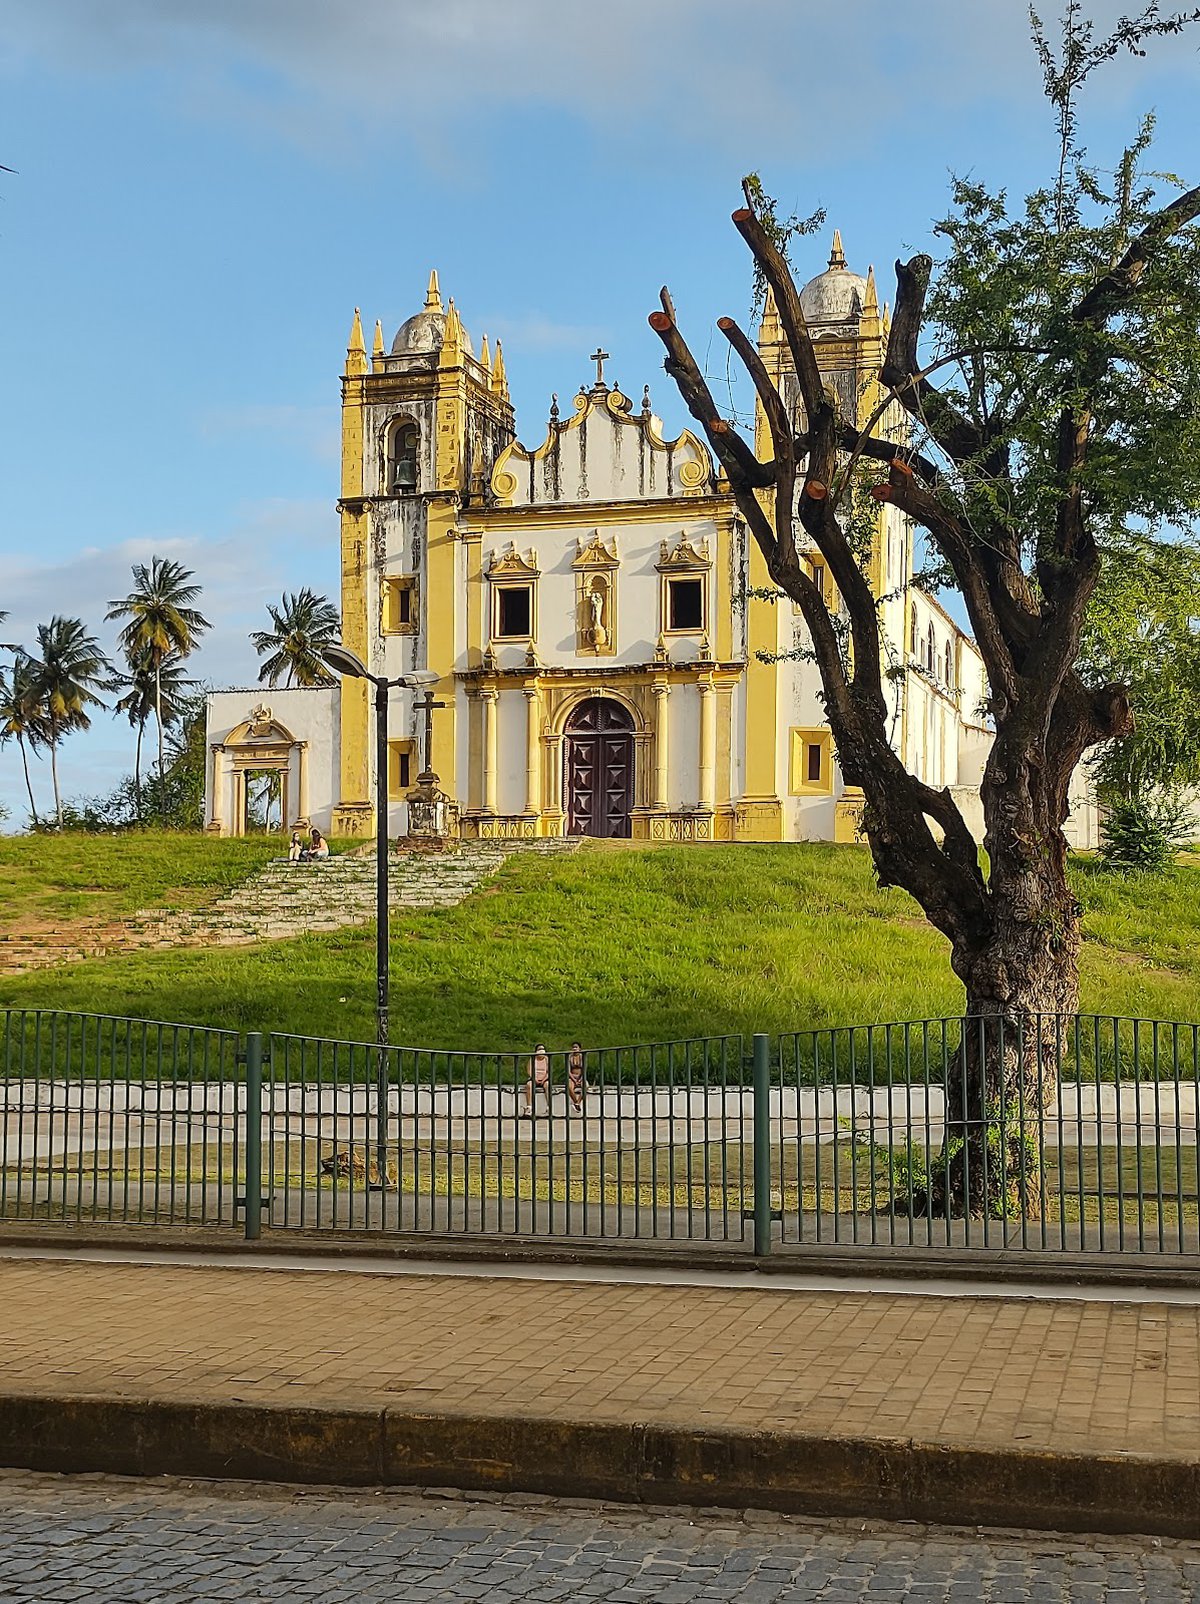 A picture of Igreja do Carmo